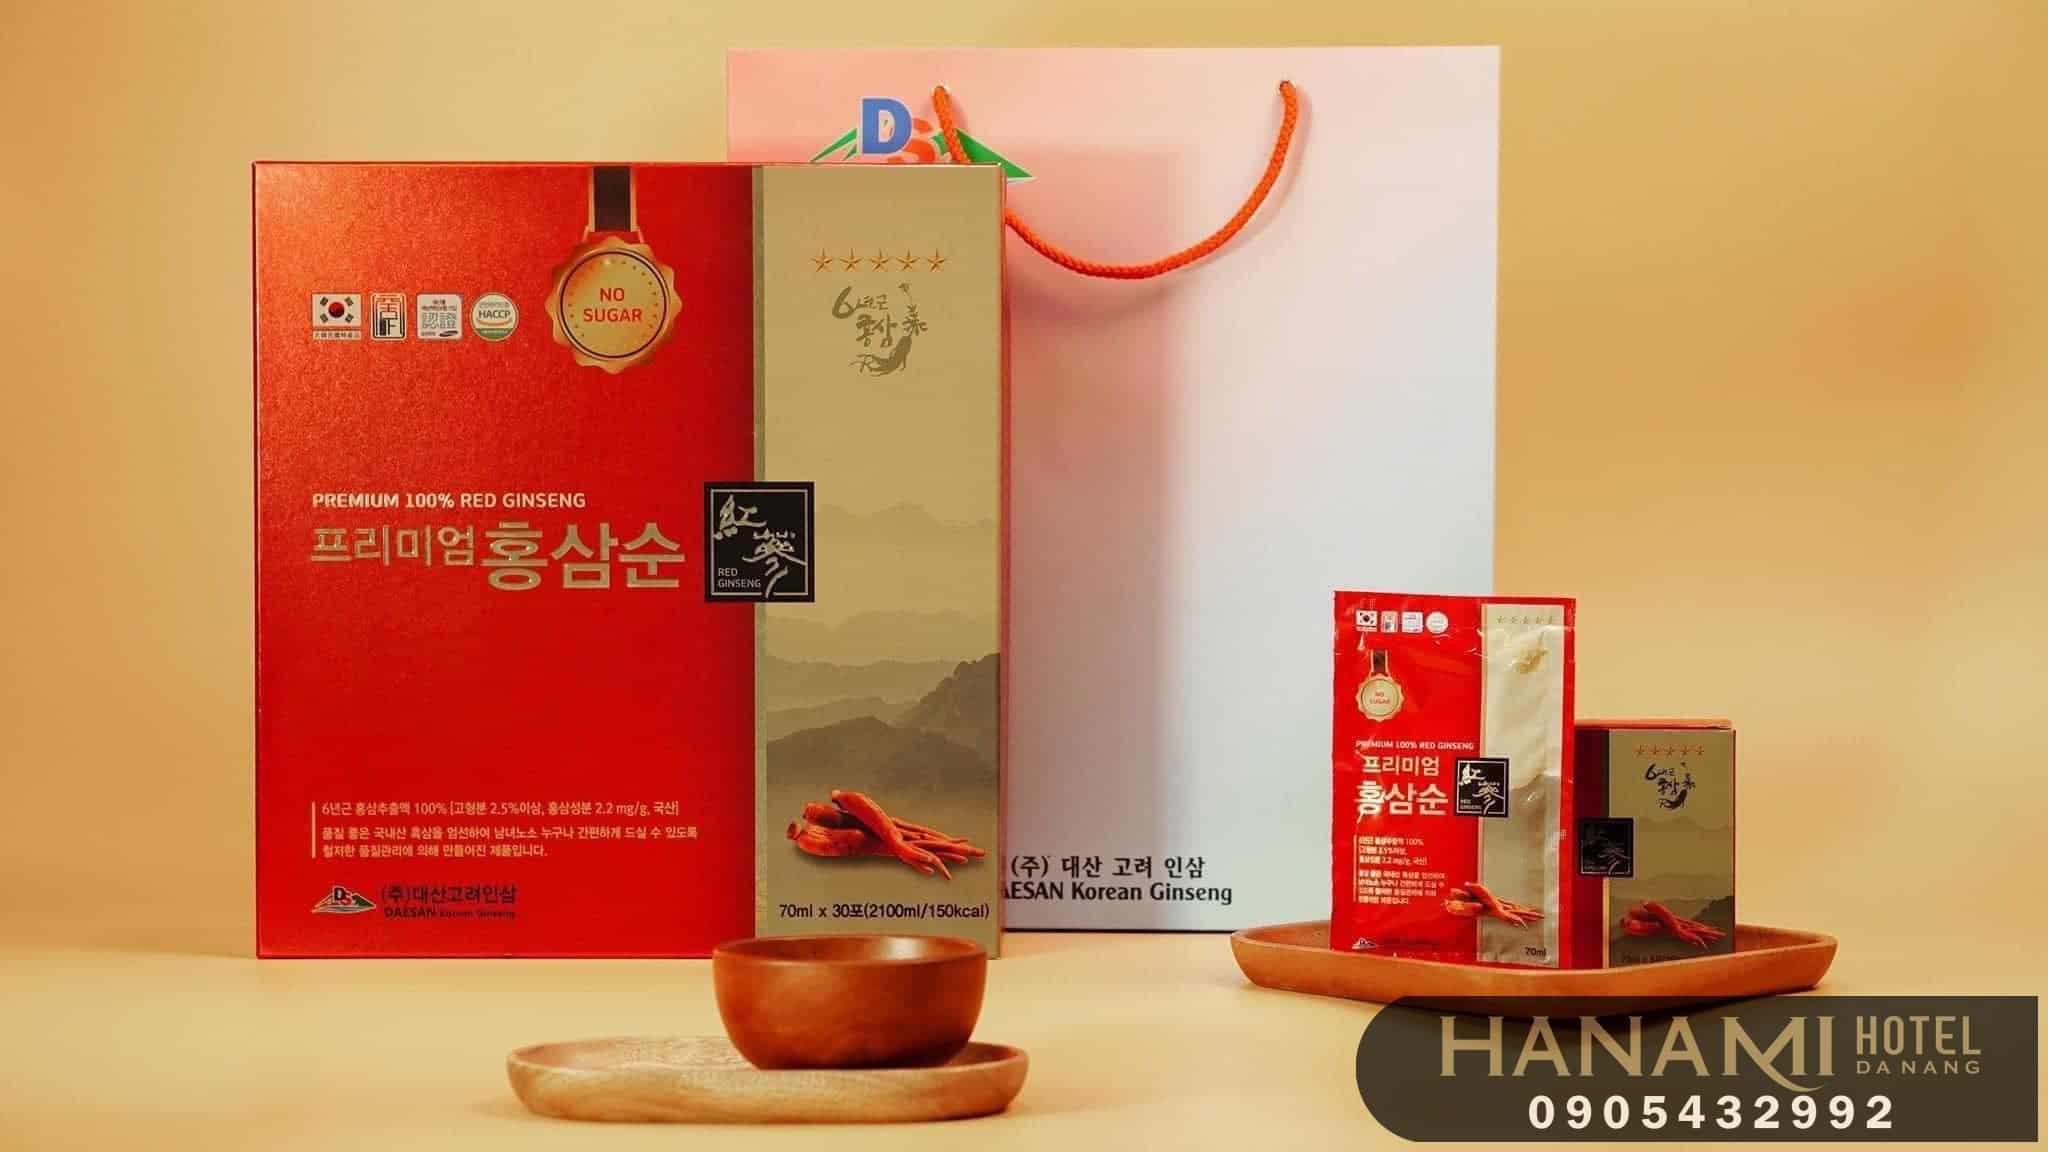 best places to buy korean ginseng in da nang